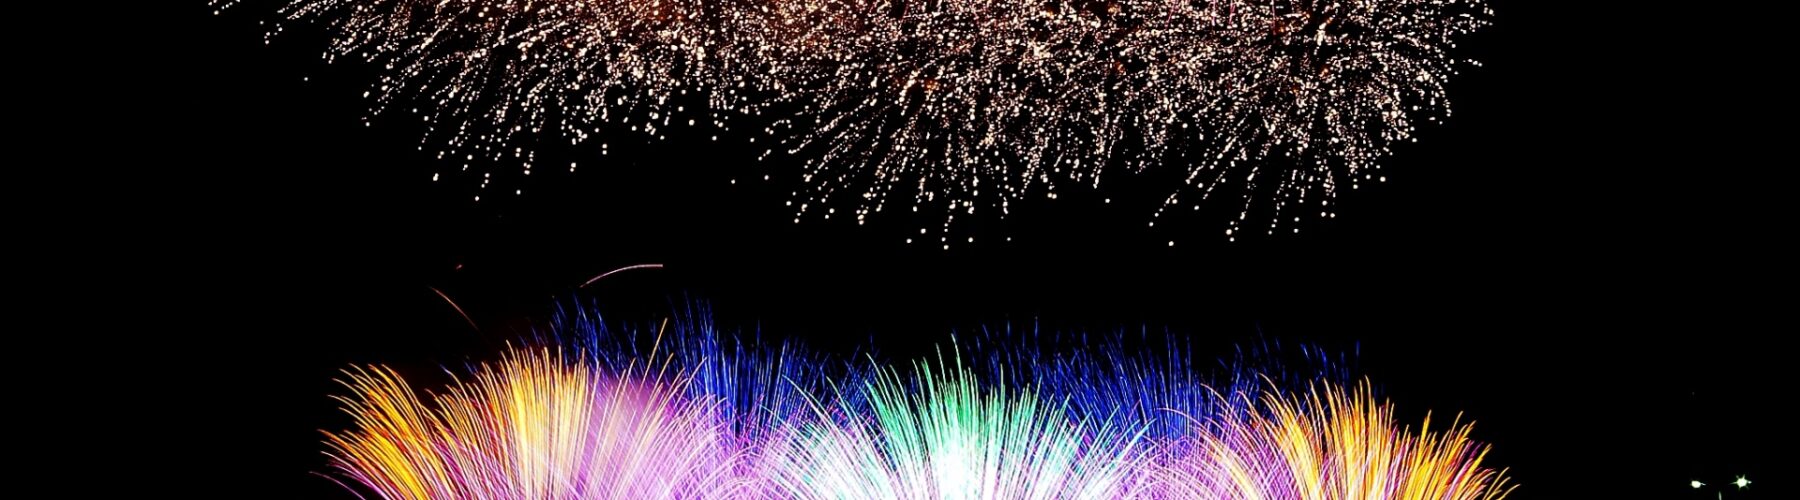 Chofu fireworks festival